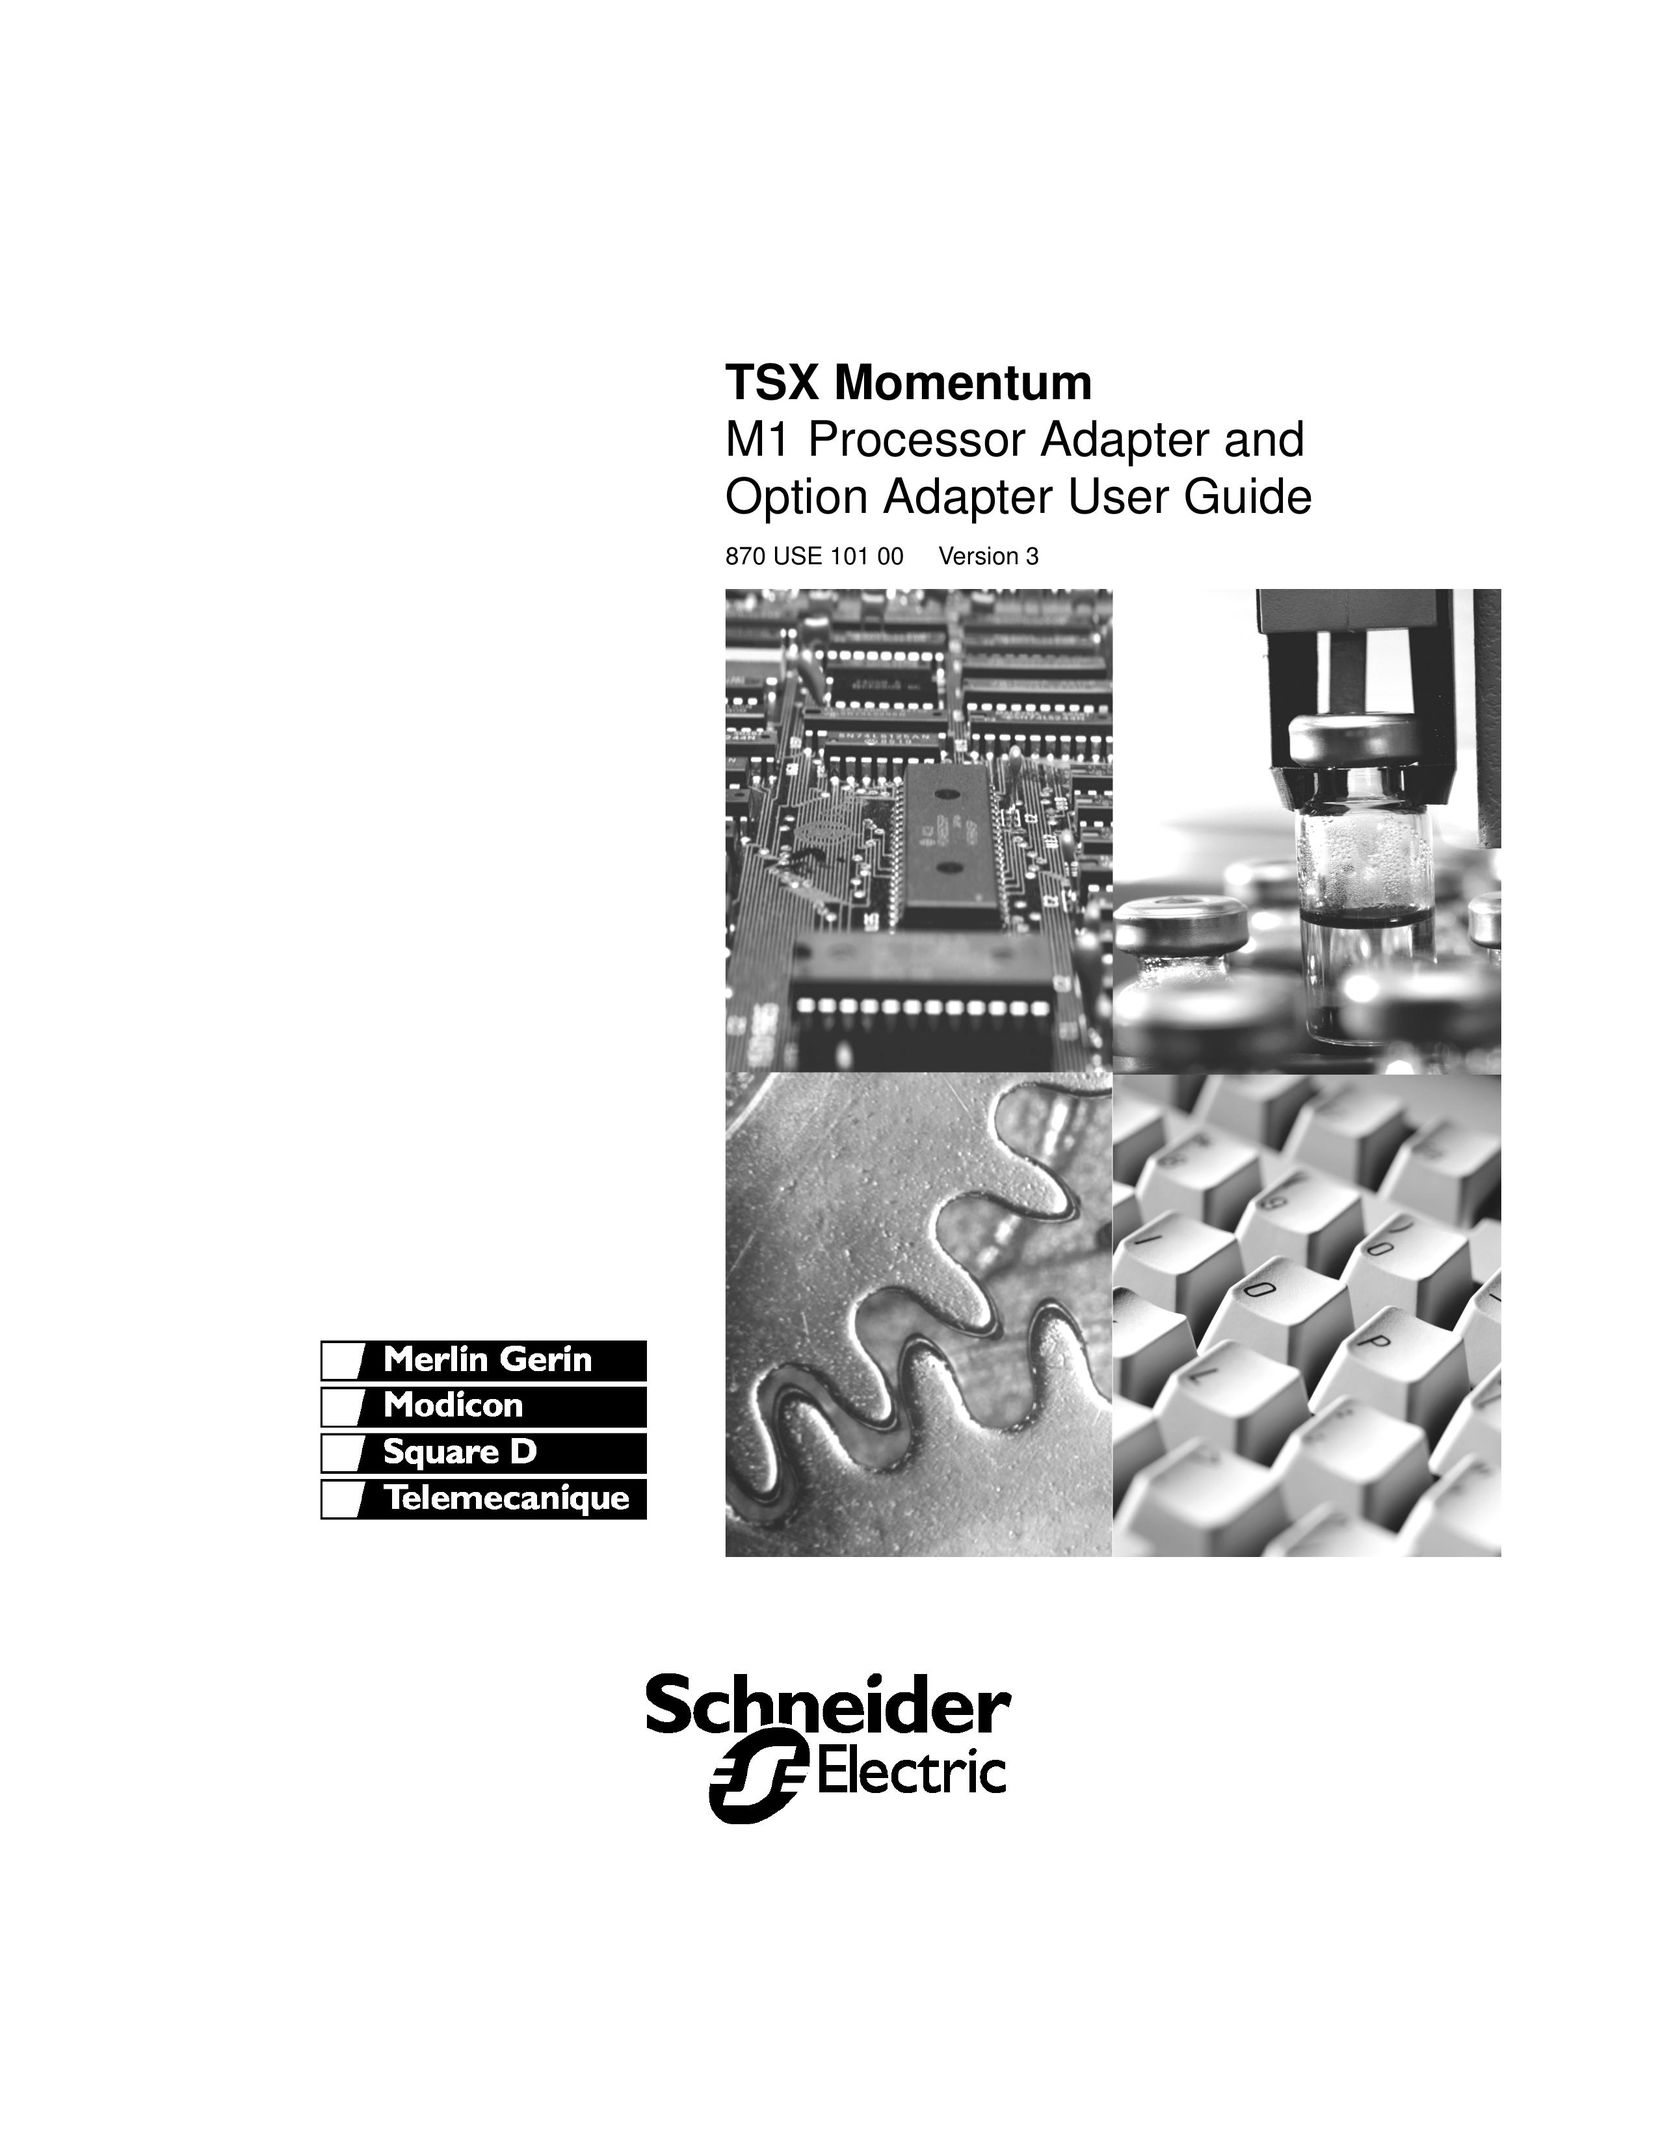 Schneider Electric Processor Adapter Network Card User Manual